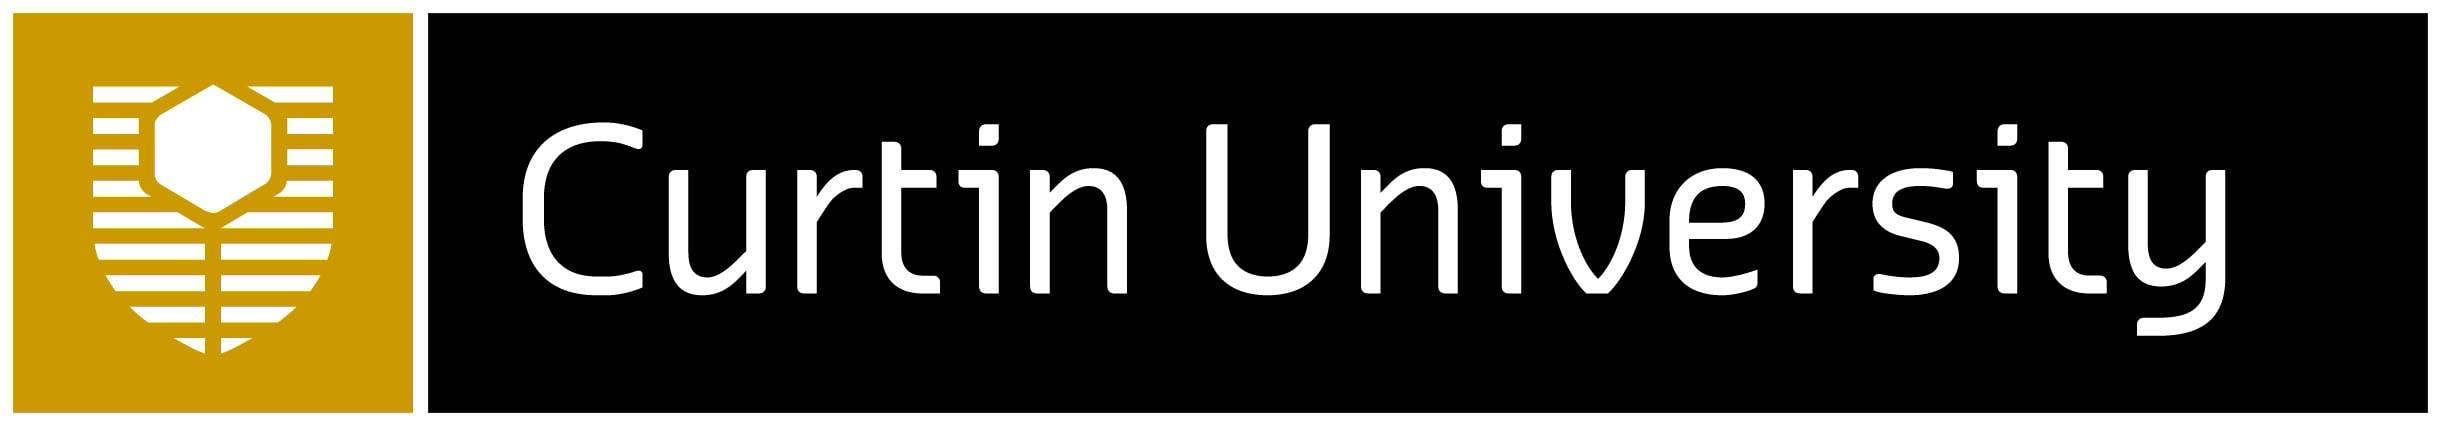 Curtain University logo